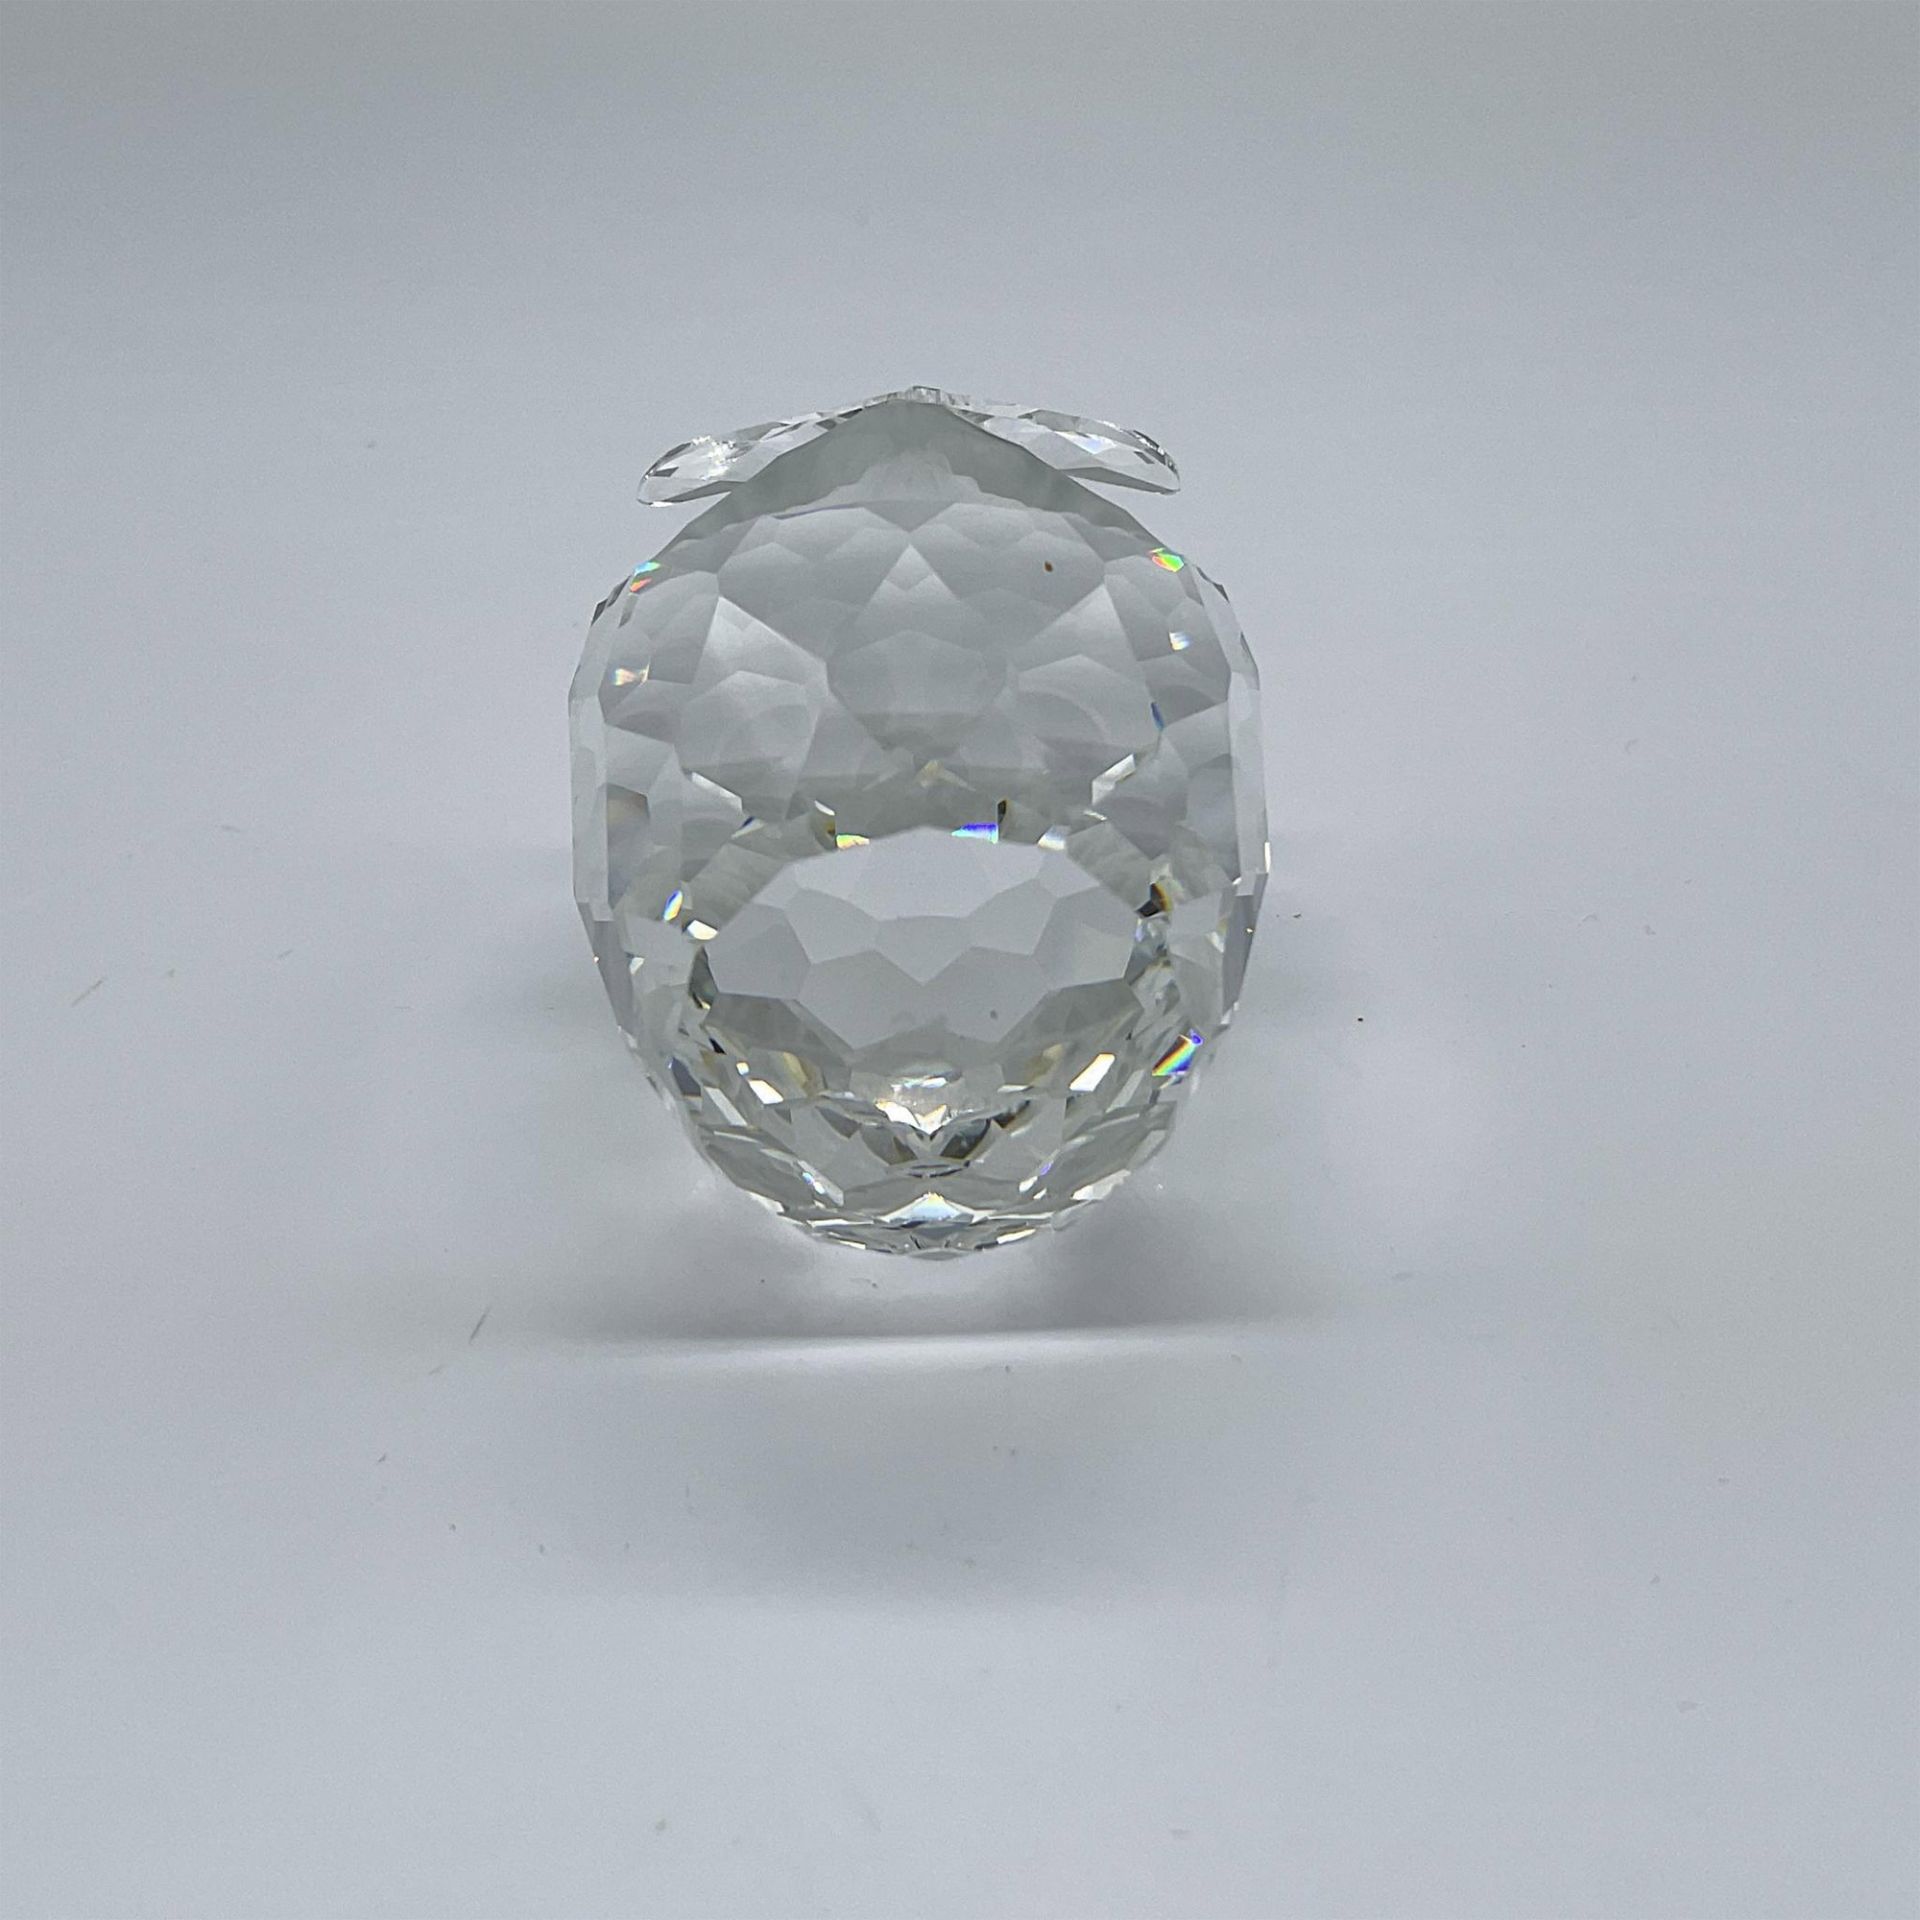 Swarovski Silver Crystal Figurine, Owl - Small - Image 4 of 4